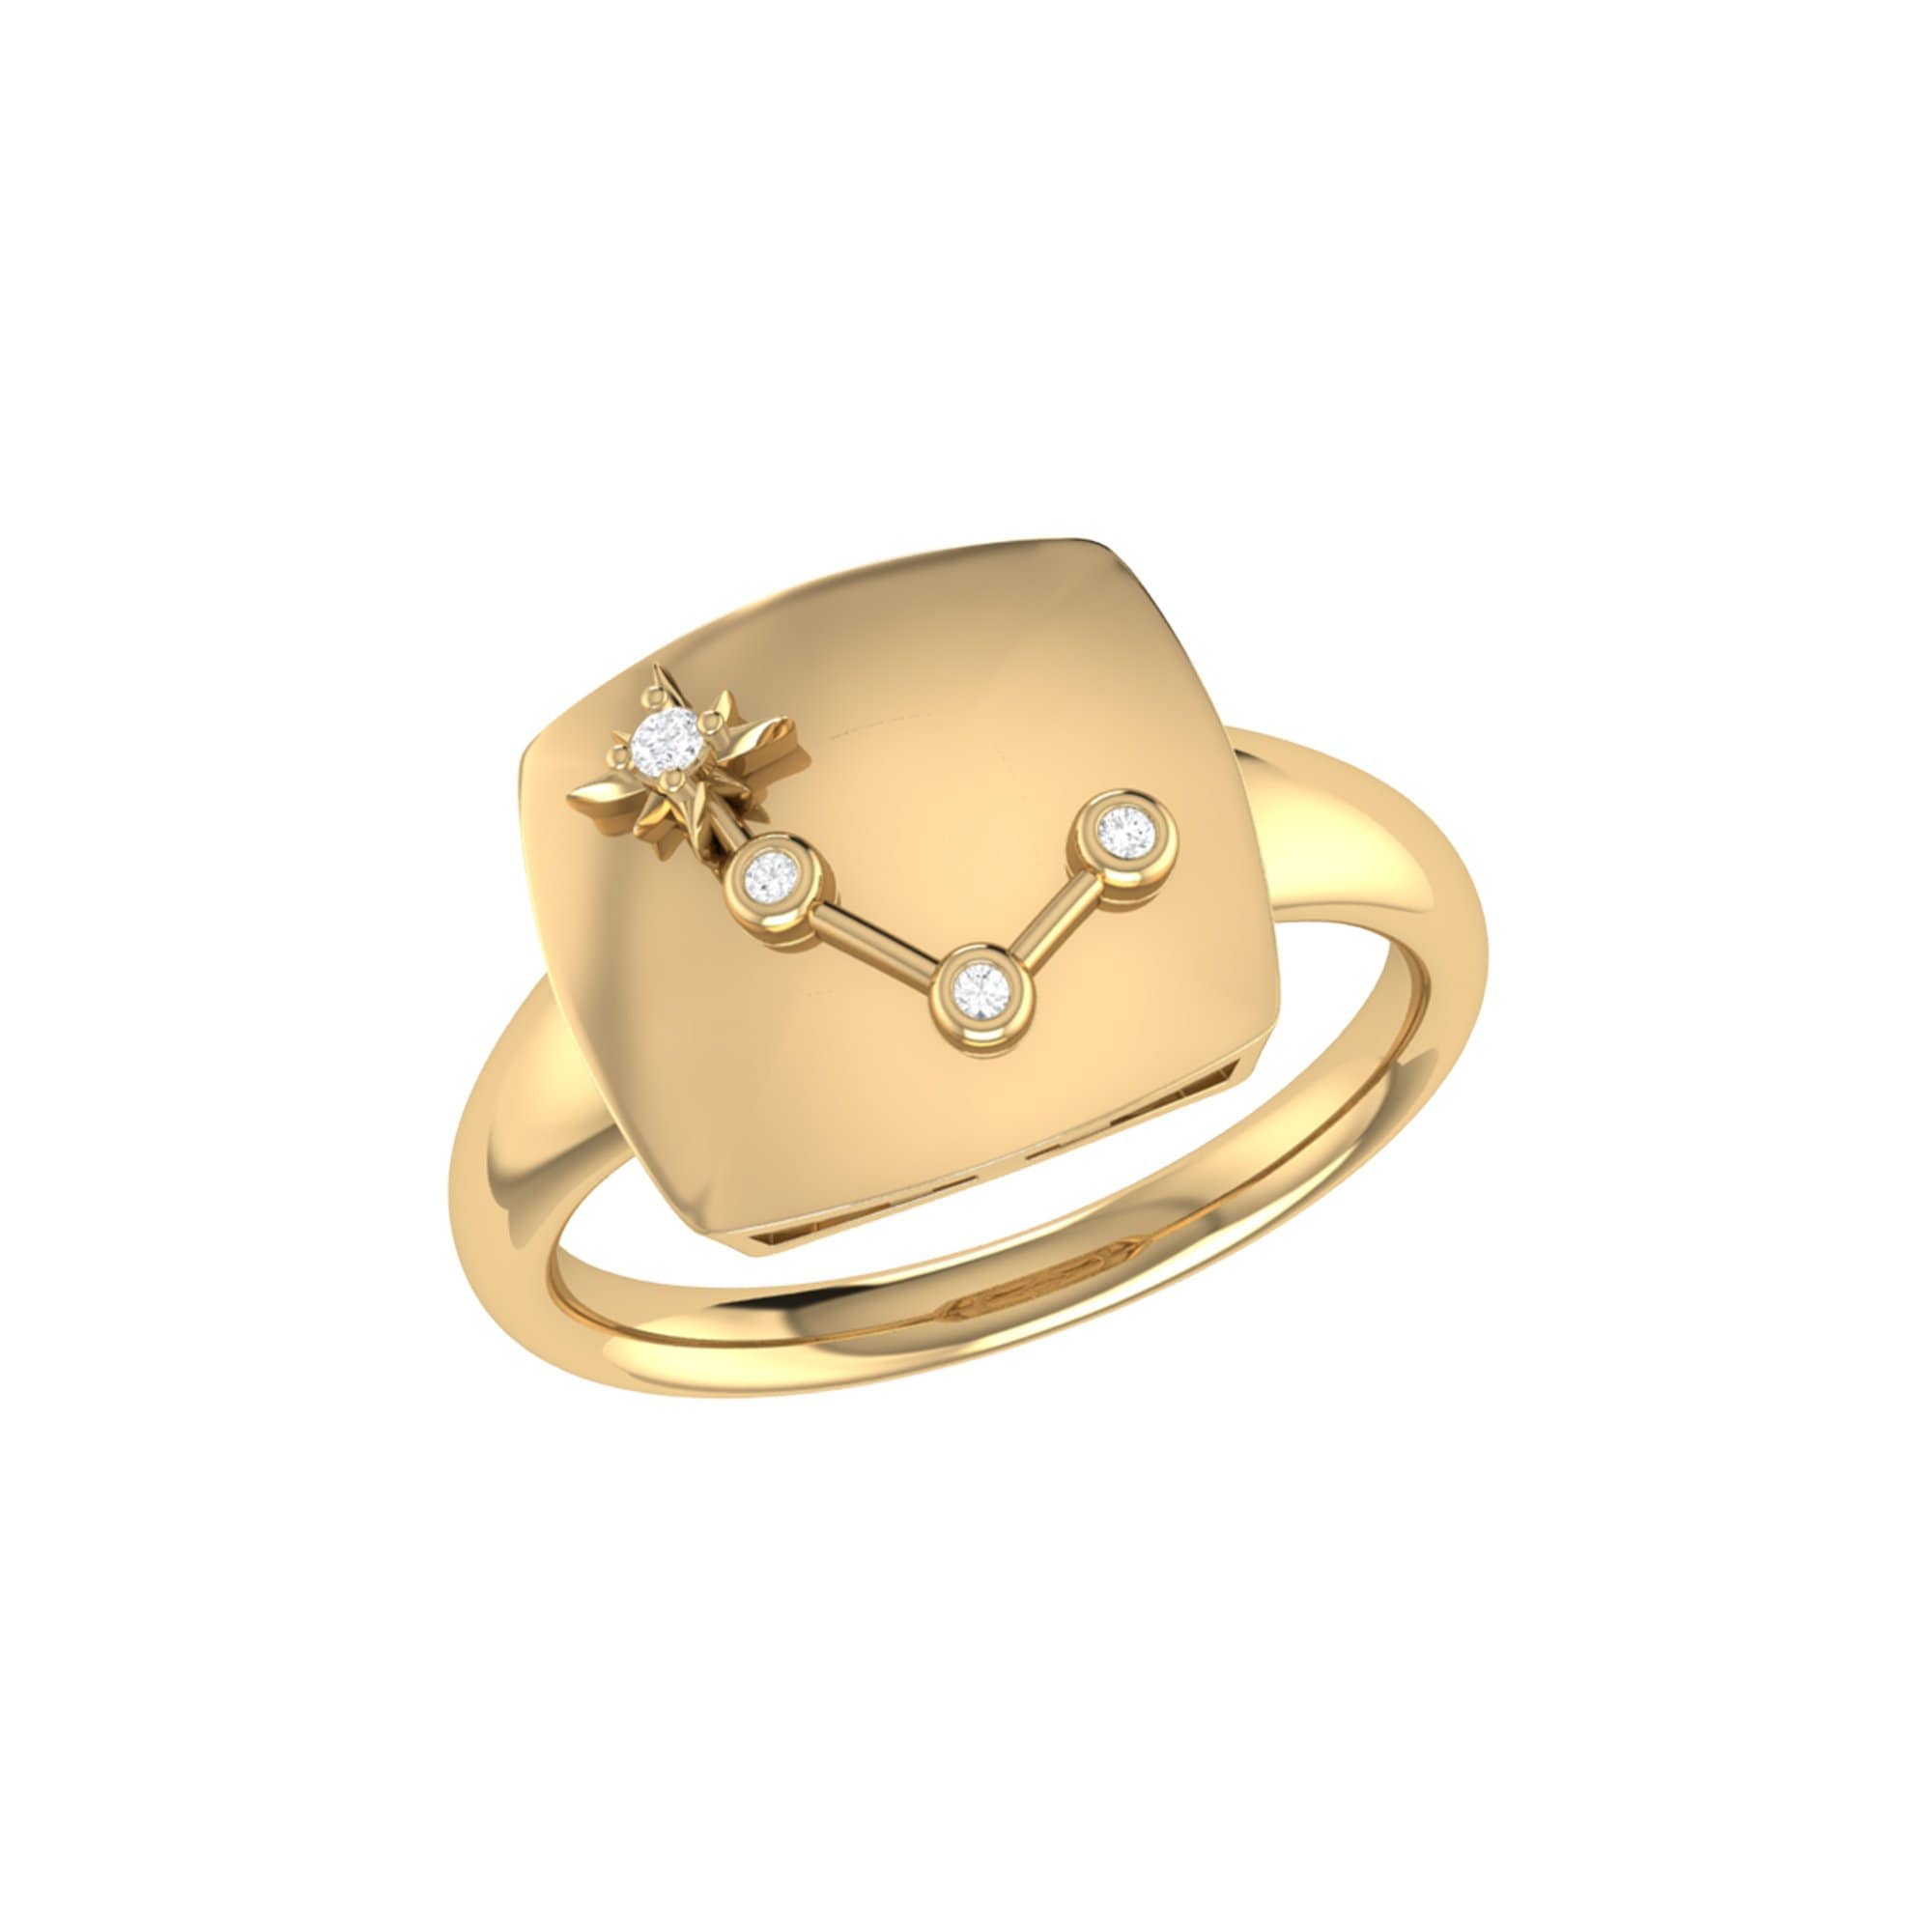 Aries Ram Constellation Signet Ring in 14K Yellow Gold Vermeil